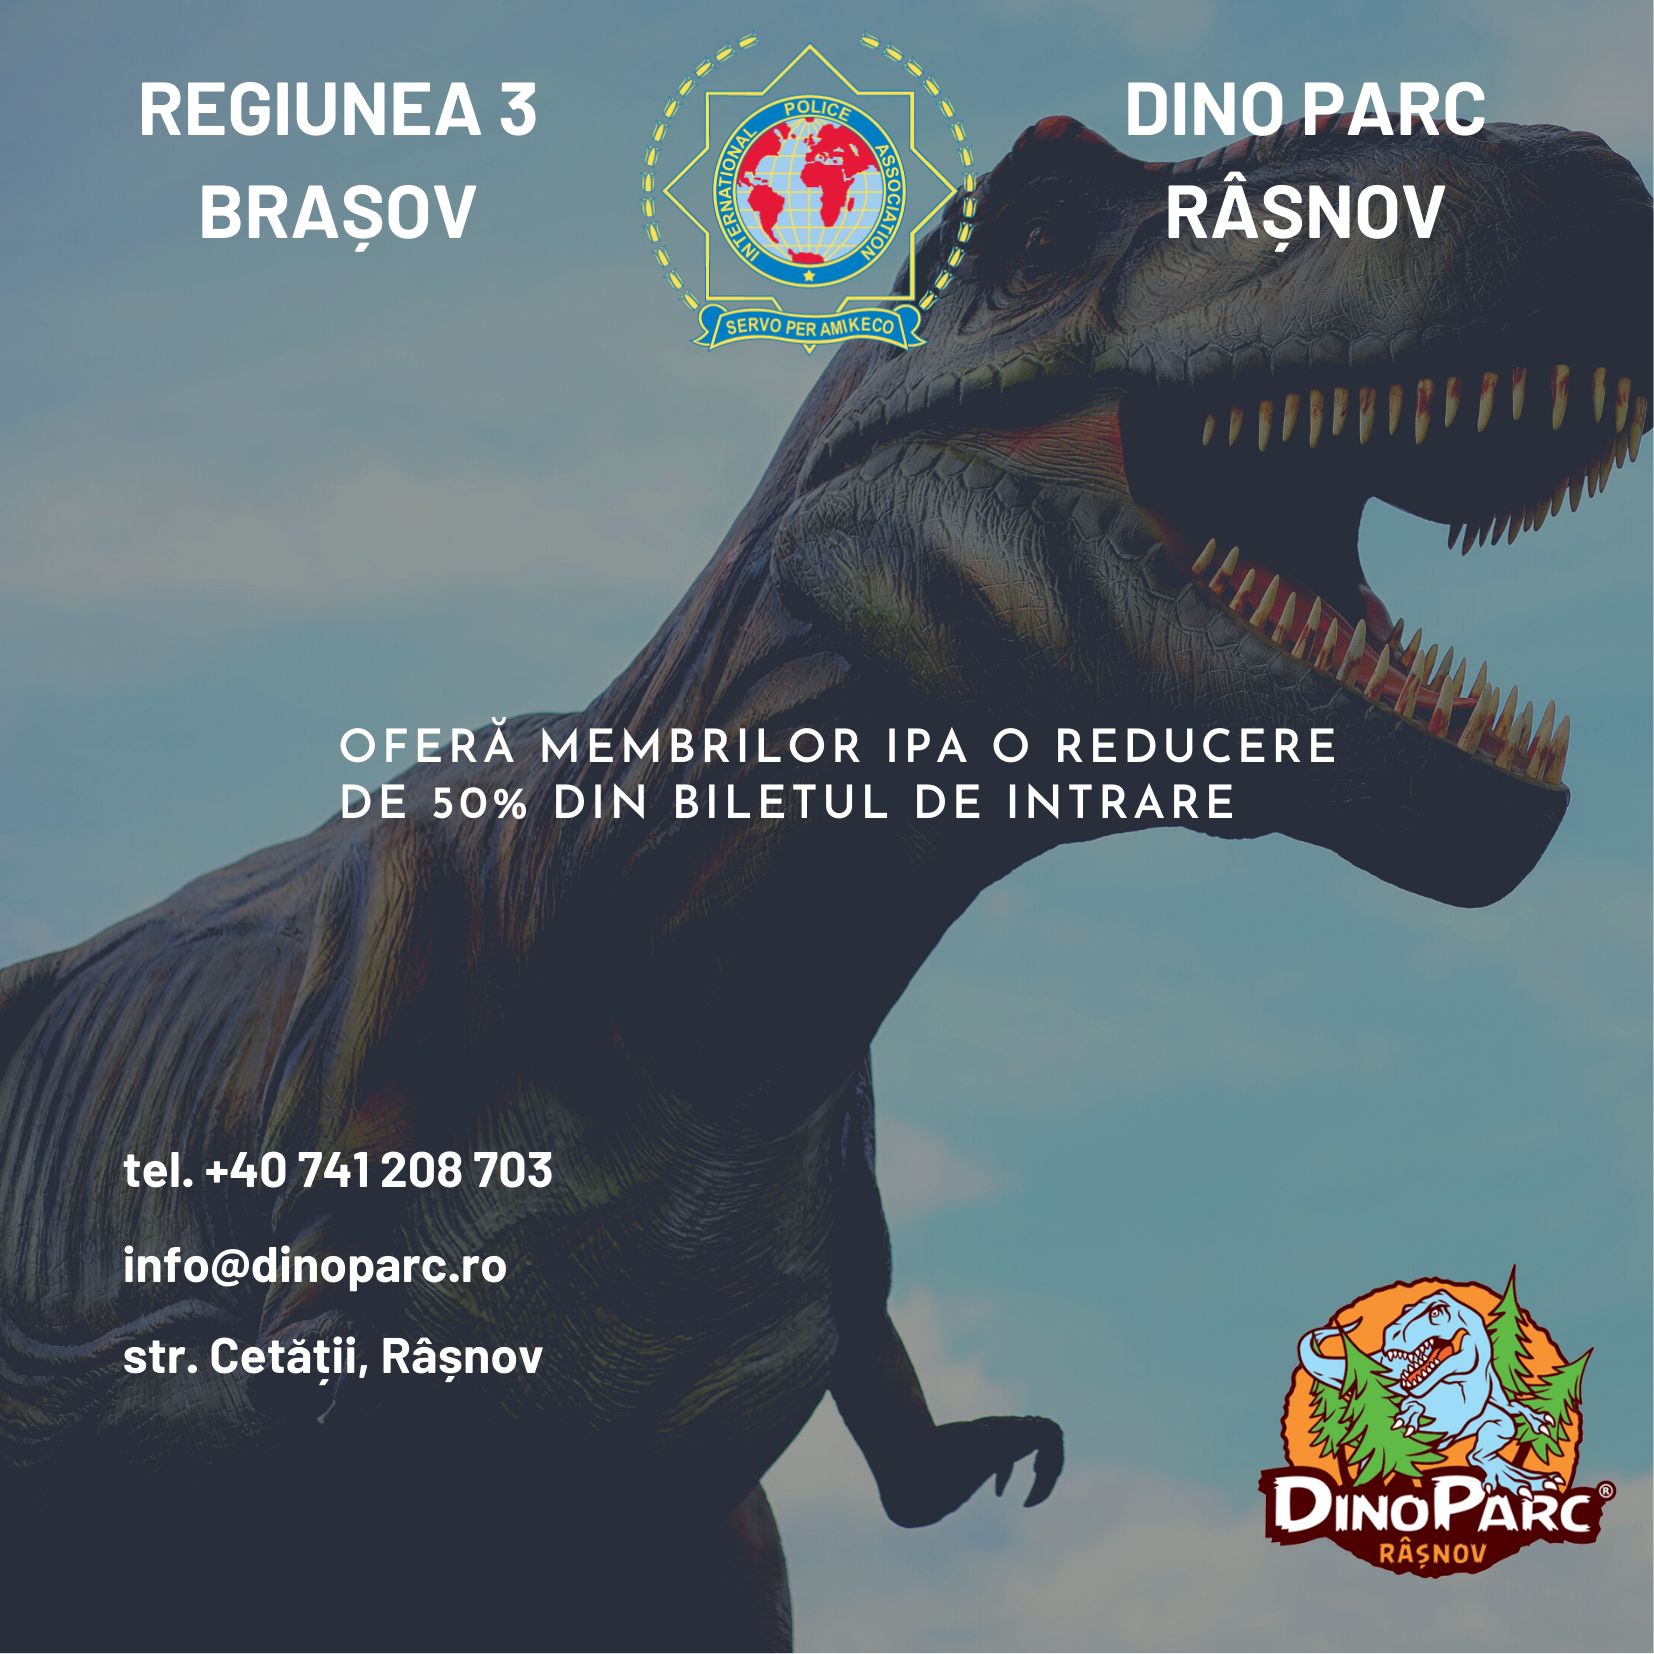 Regiunea 3 Brasov Dino Parc Rasnov